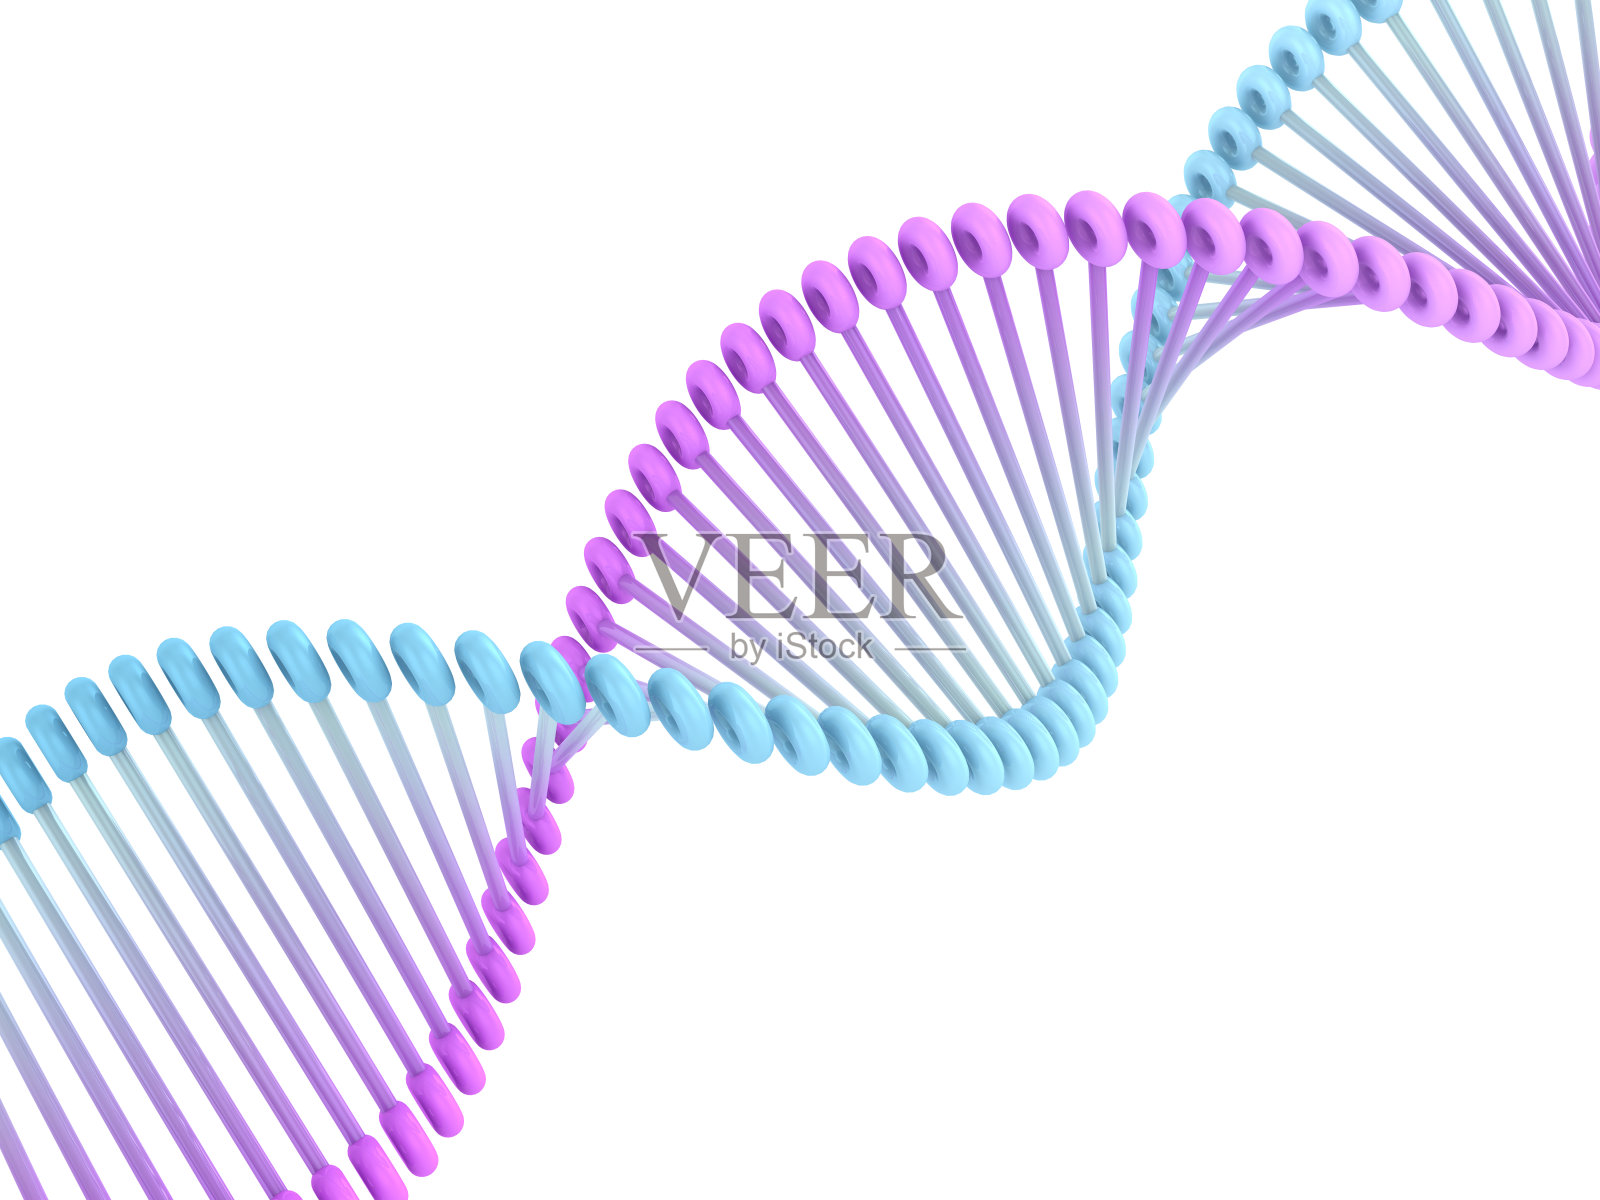 DNA链。抽象的科学背景。三维渲染插画图片素材